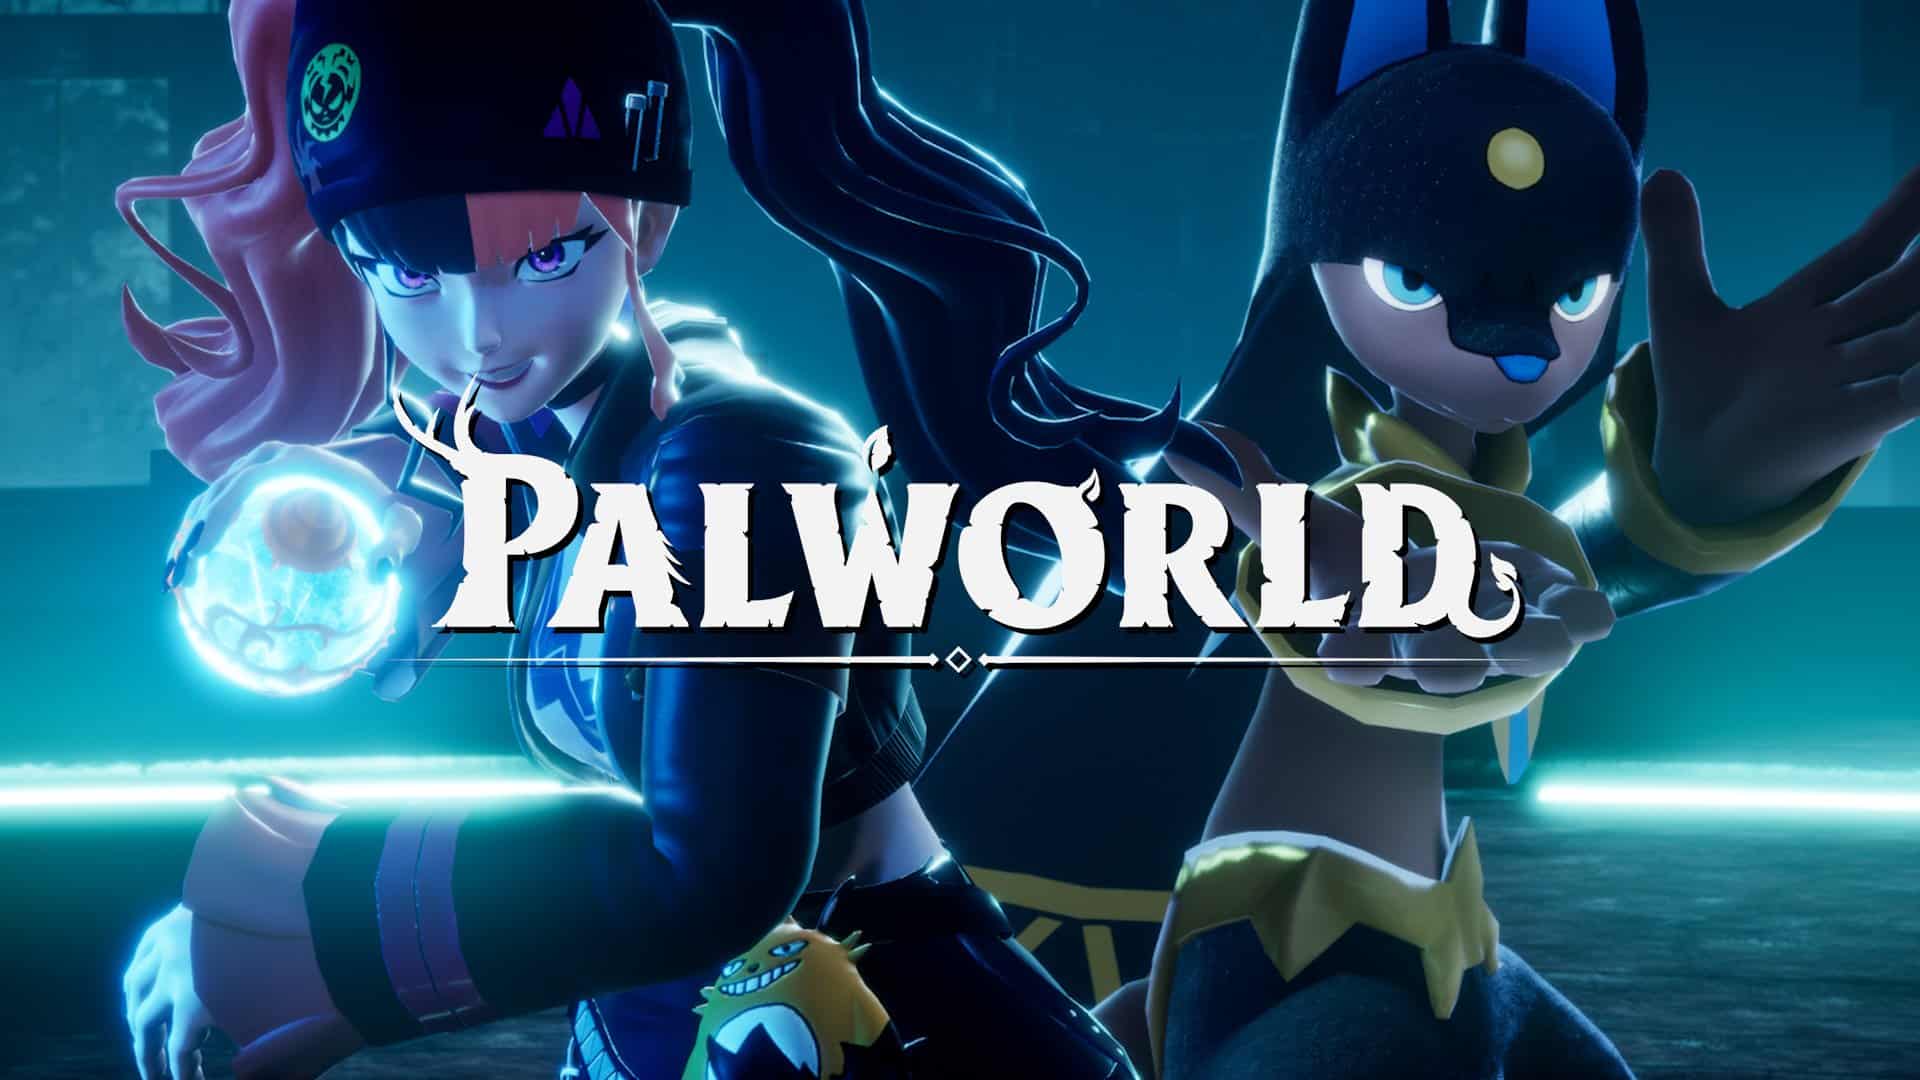 Palworld trailer 09 21 23 1